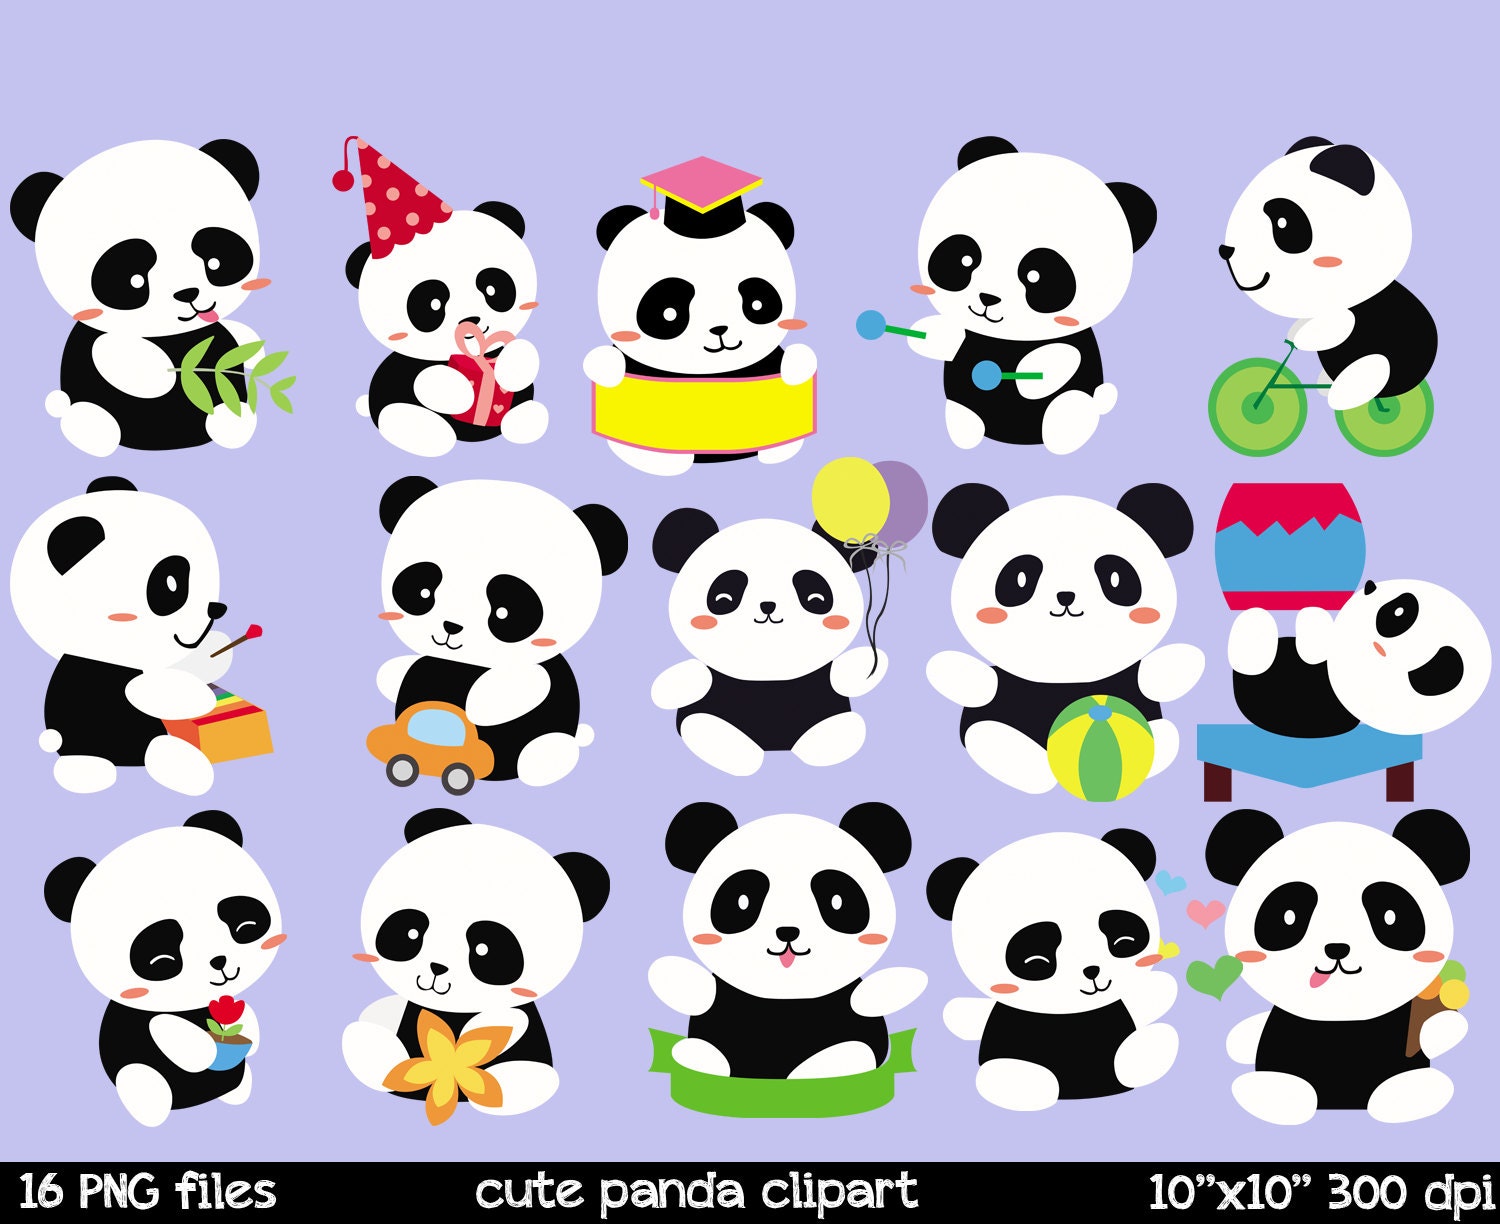 clipart panda reviews - photo #13